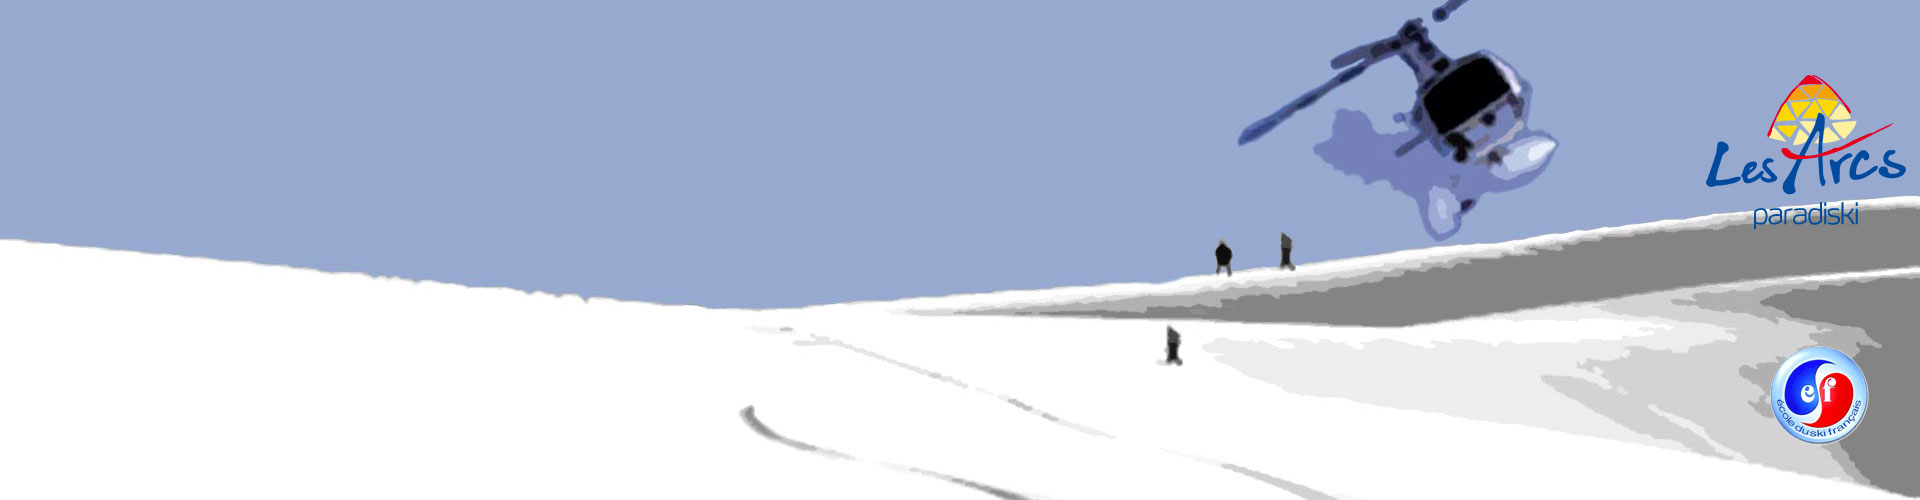 Sortie heli ski Les Arcs 2000, 1950, 1800 et 1600